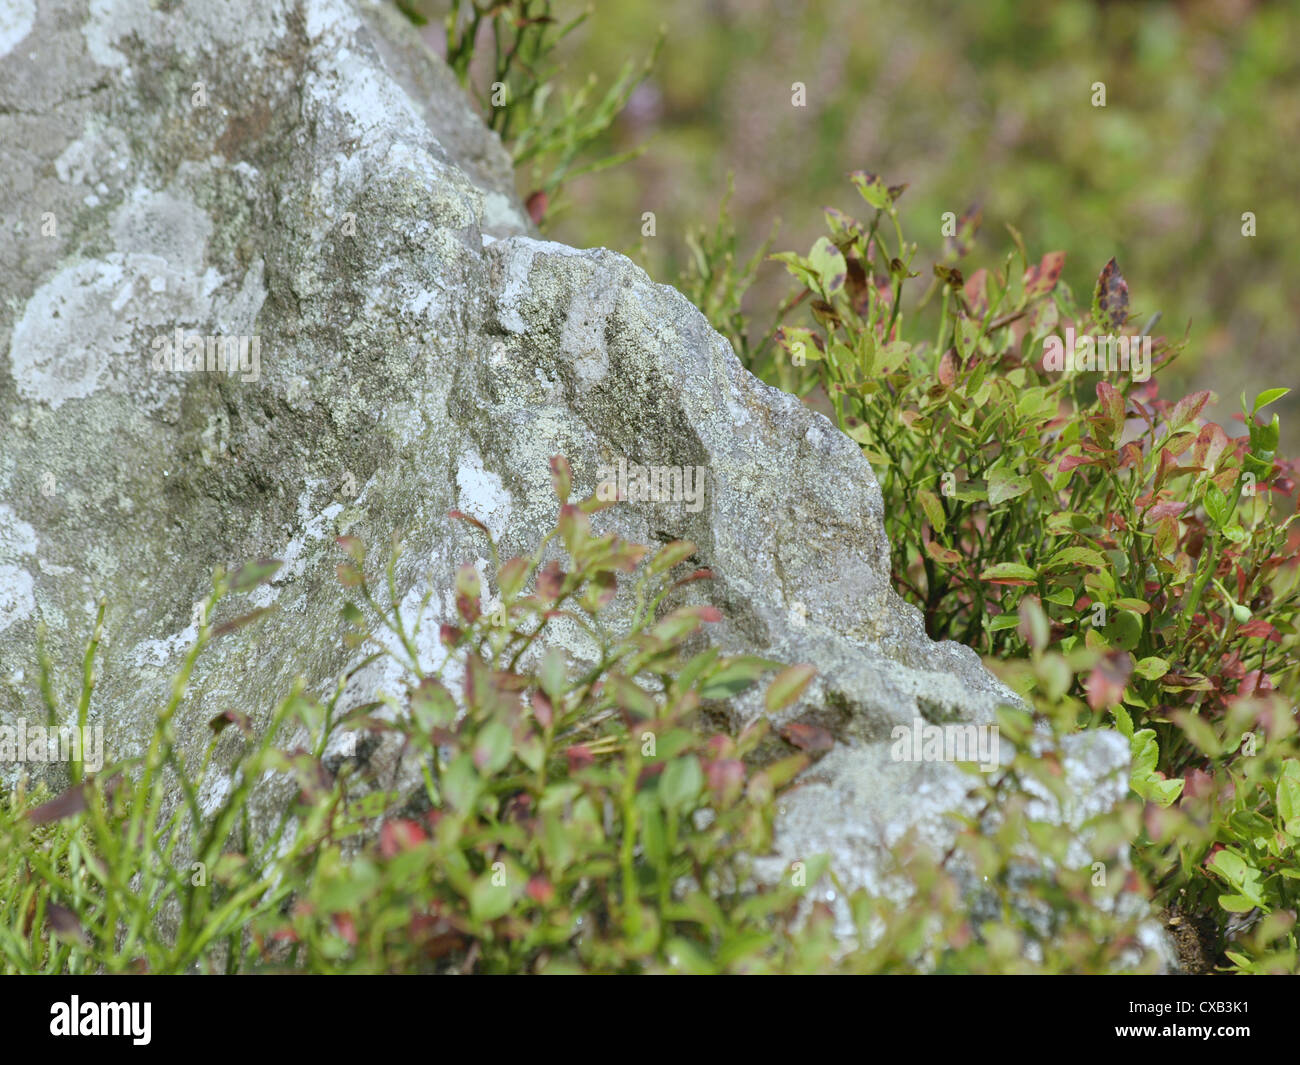 Piedra Grande con arbustos de arándanos en otoño / großer Stein mit Blaubeersträuchern im Herbst Foto de stock